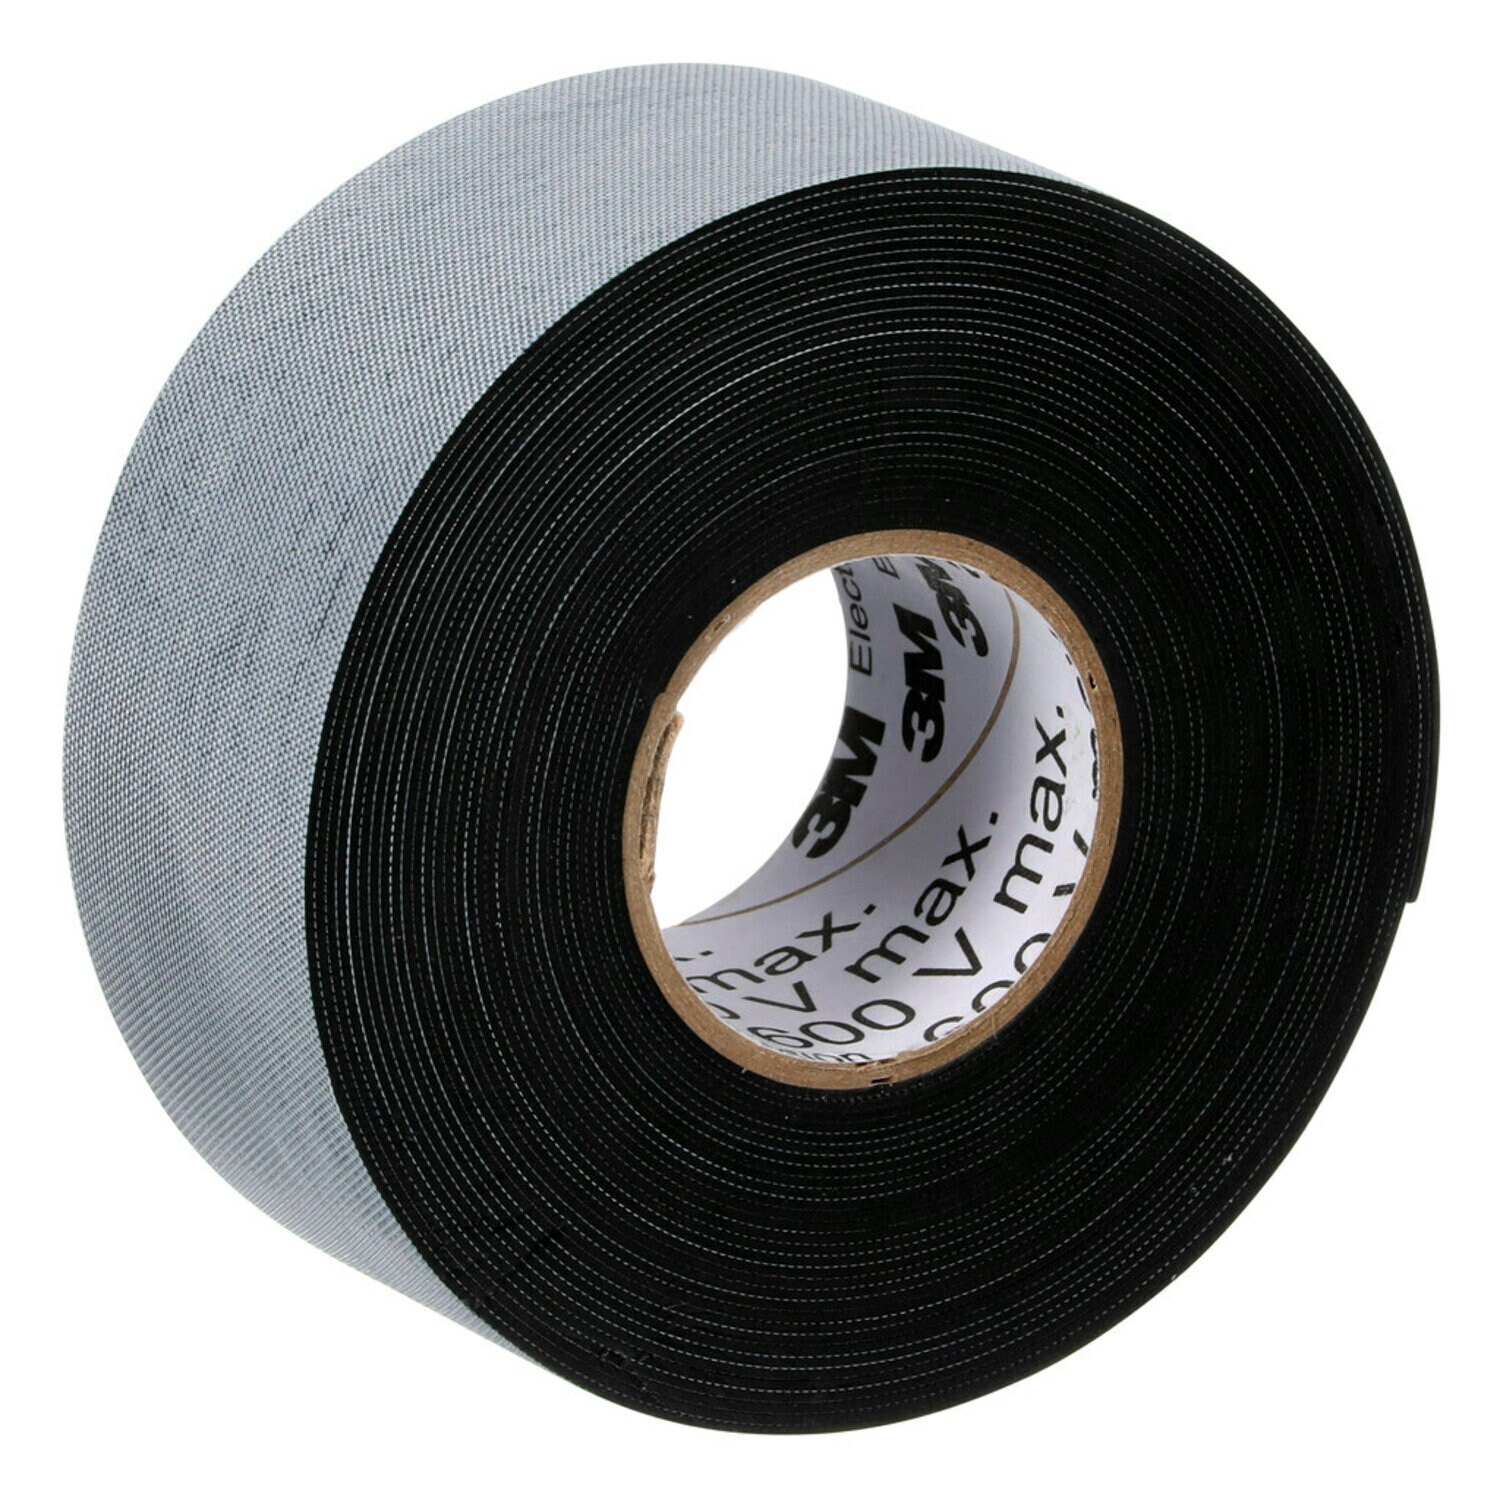 7000090115 - 3M Temflex Rubber Splicing Tape 2155, 1-1/2 in x 22 ft, Black, 45
rolls/Case